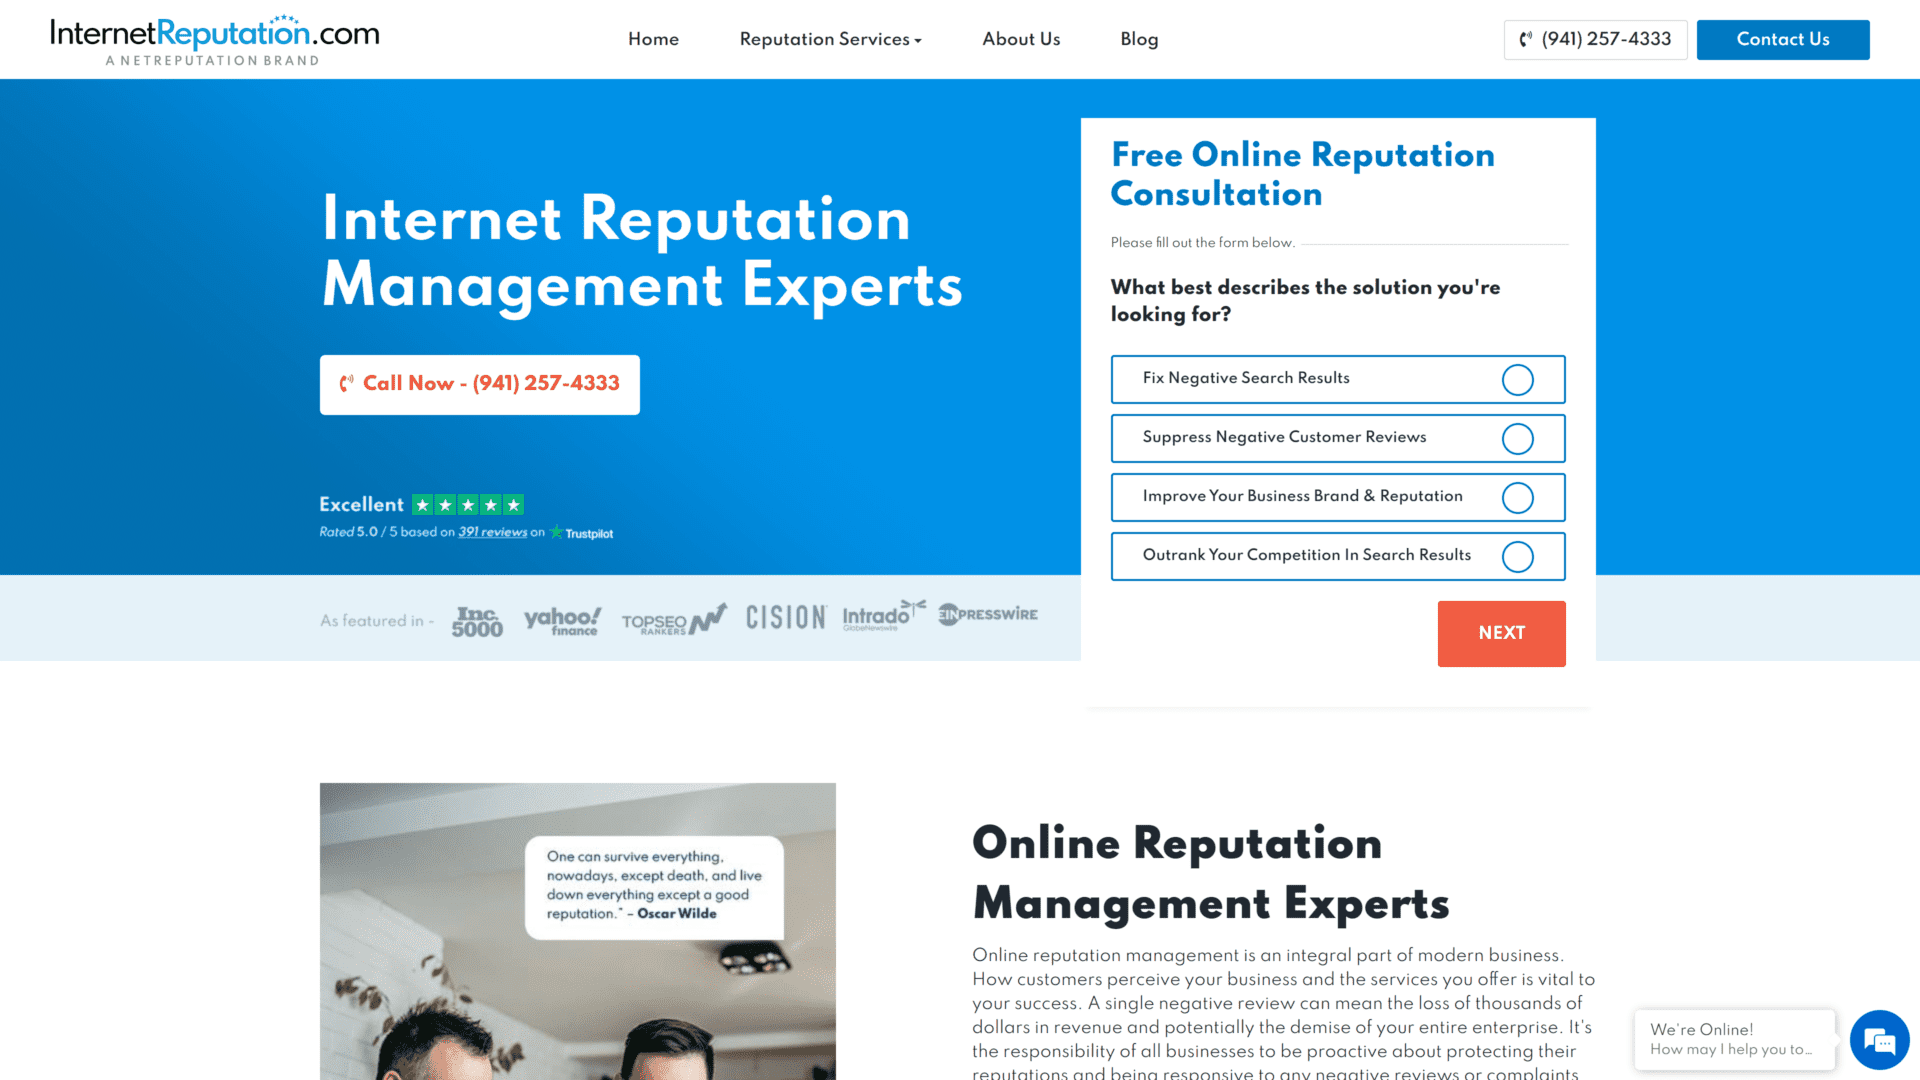 screenshot of the internet reputation.com homepage